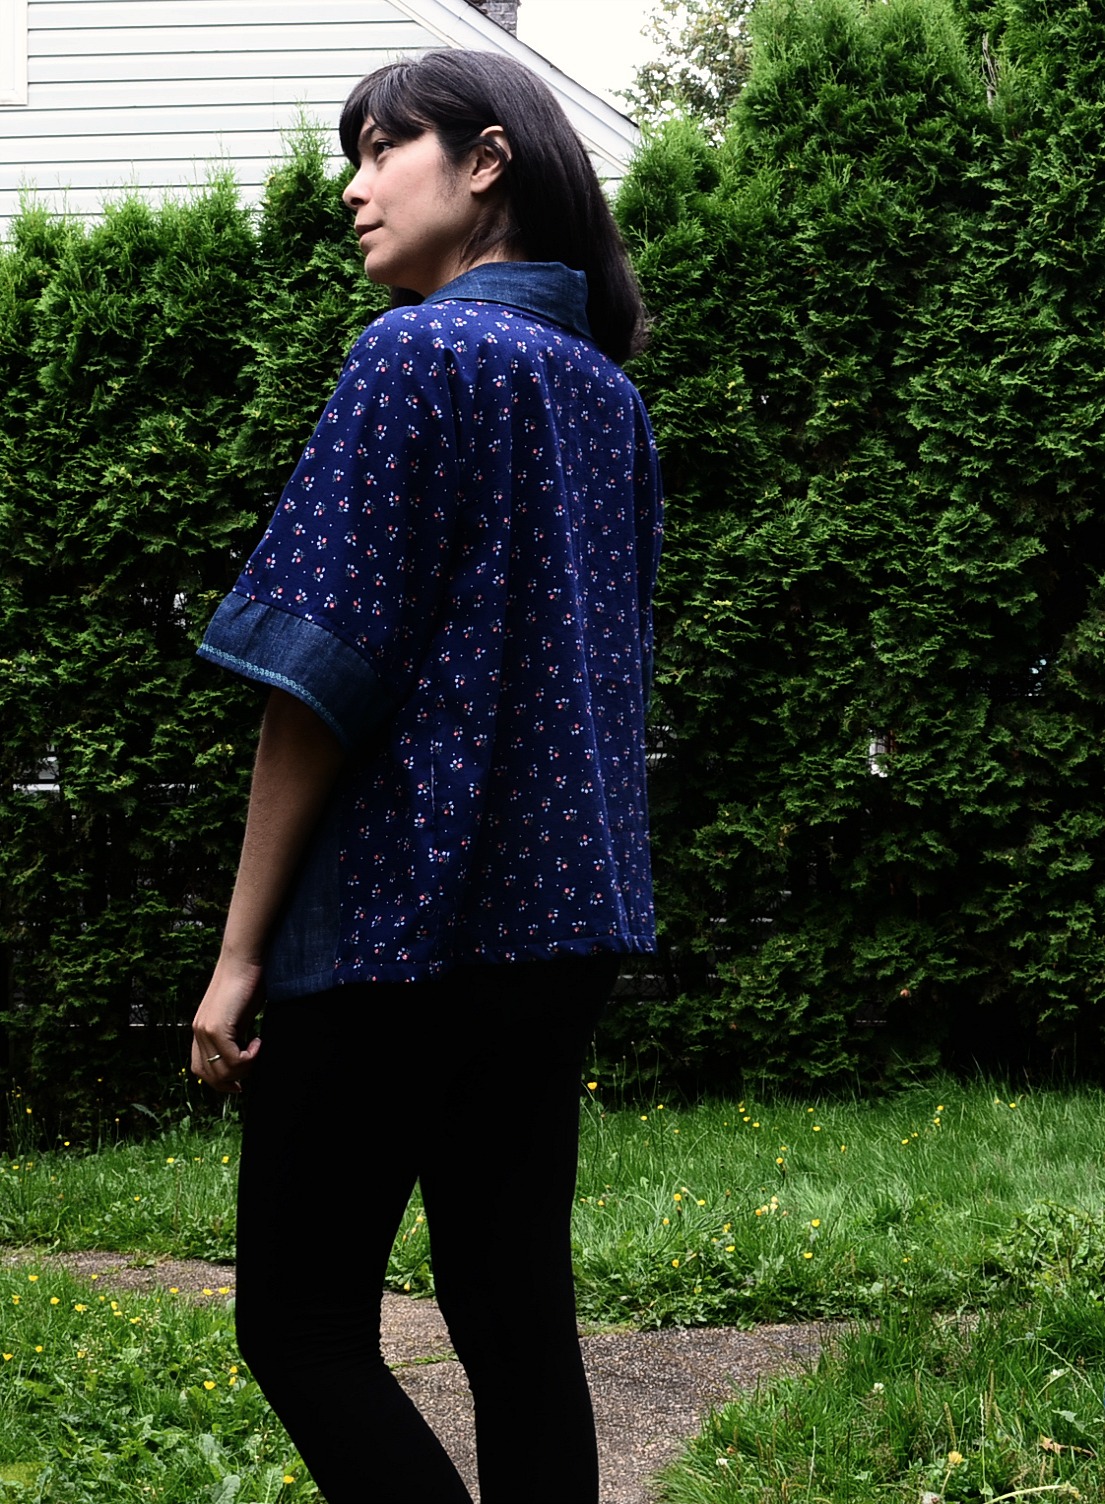 How to make an Easy Kimono Top | WeAllSew